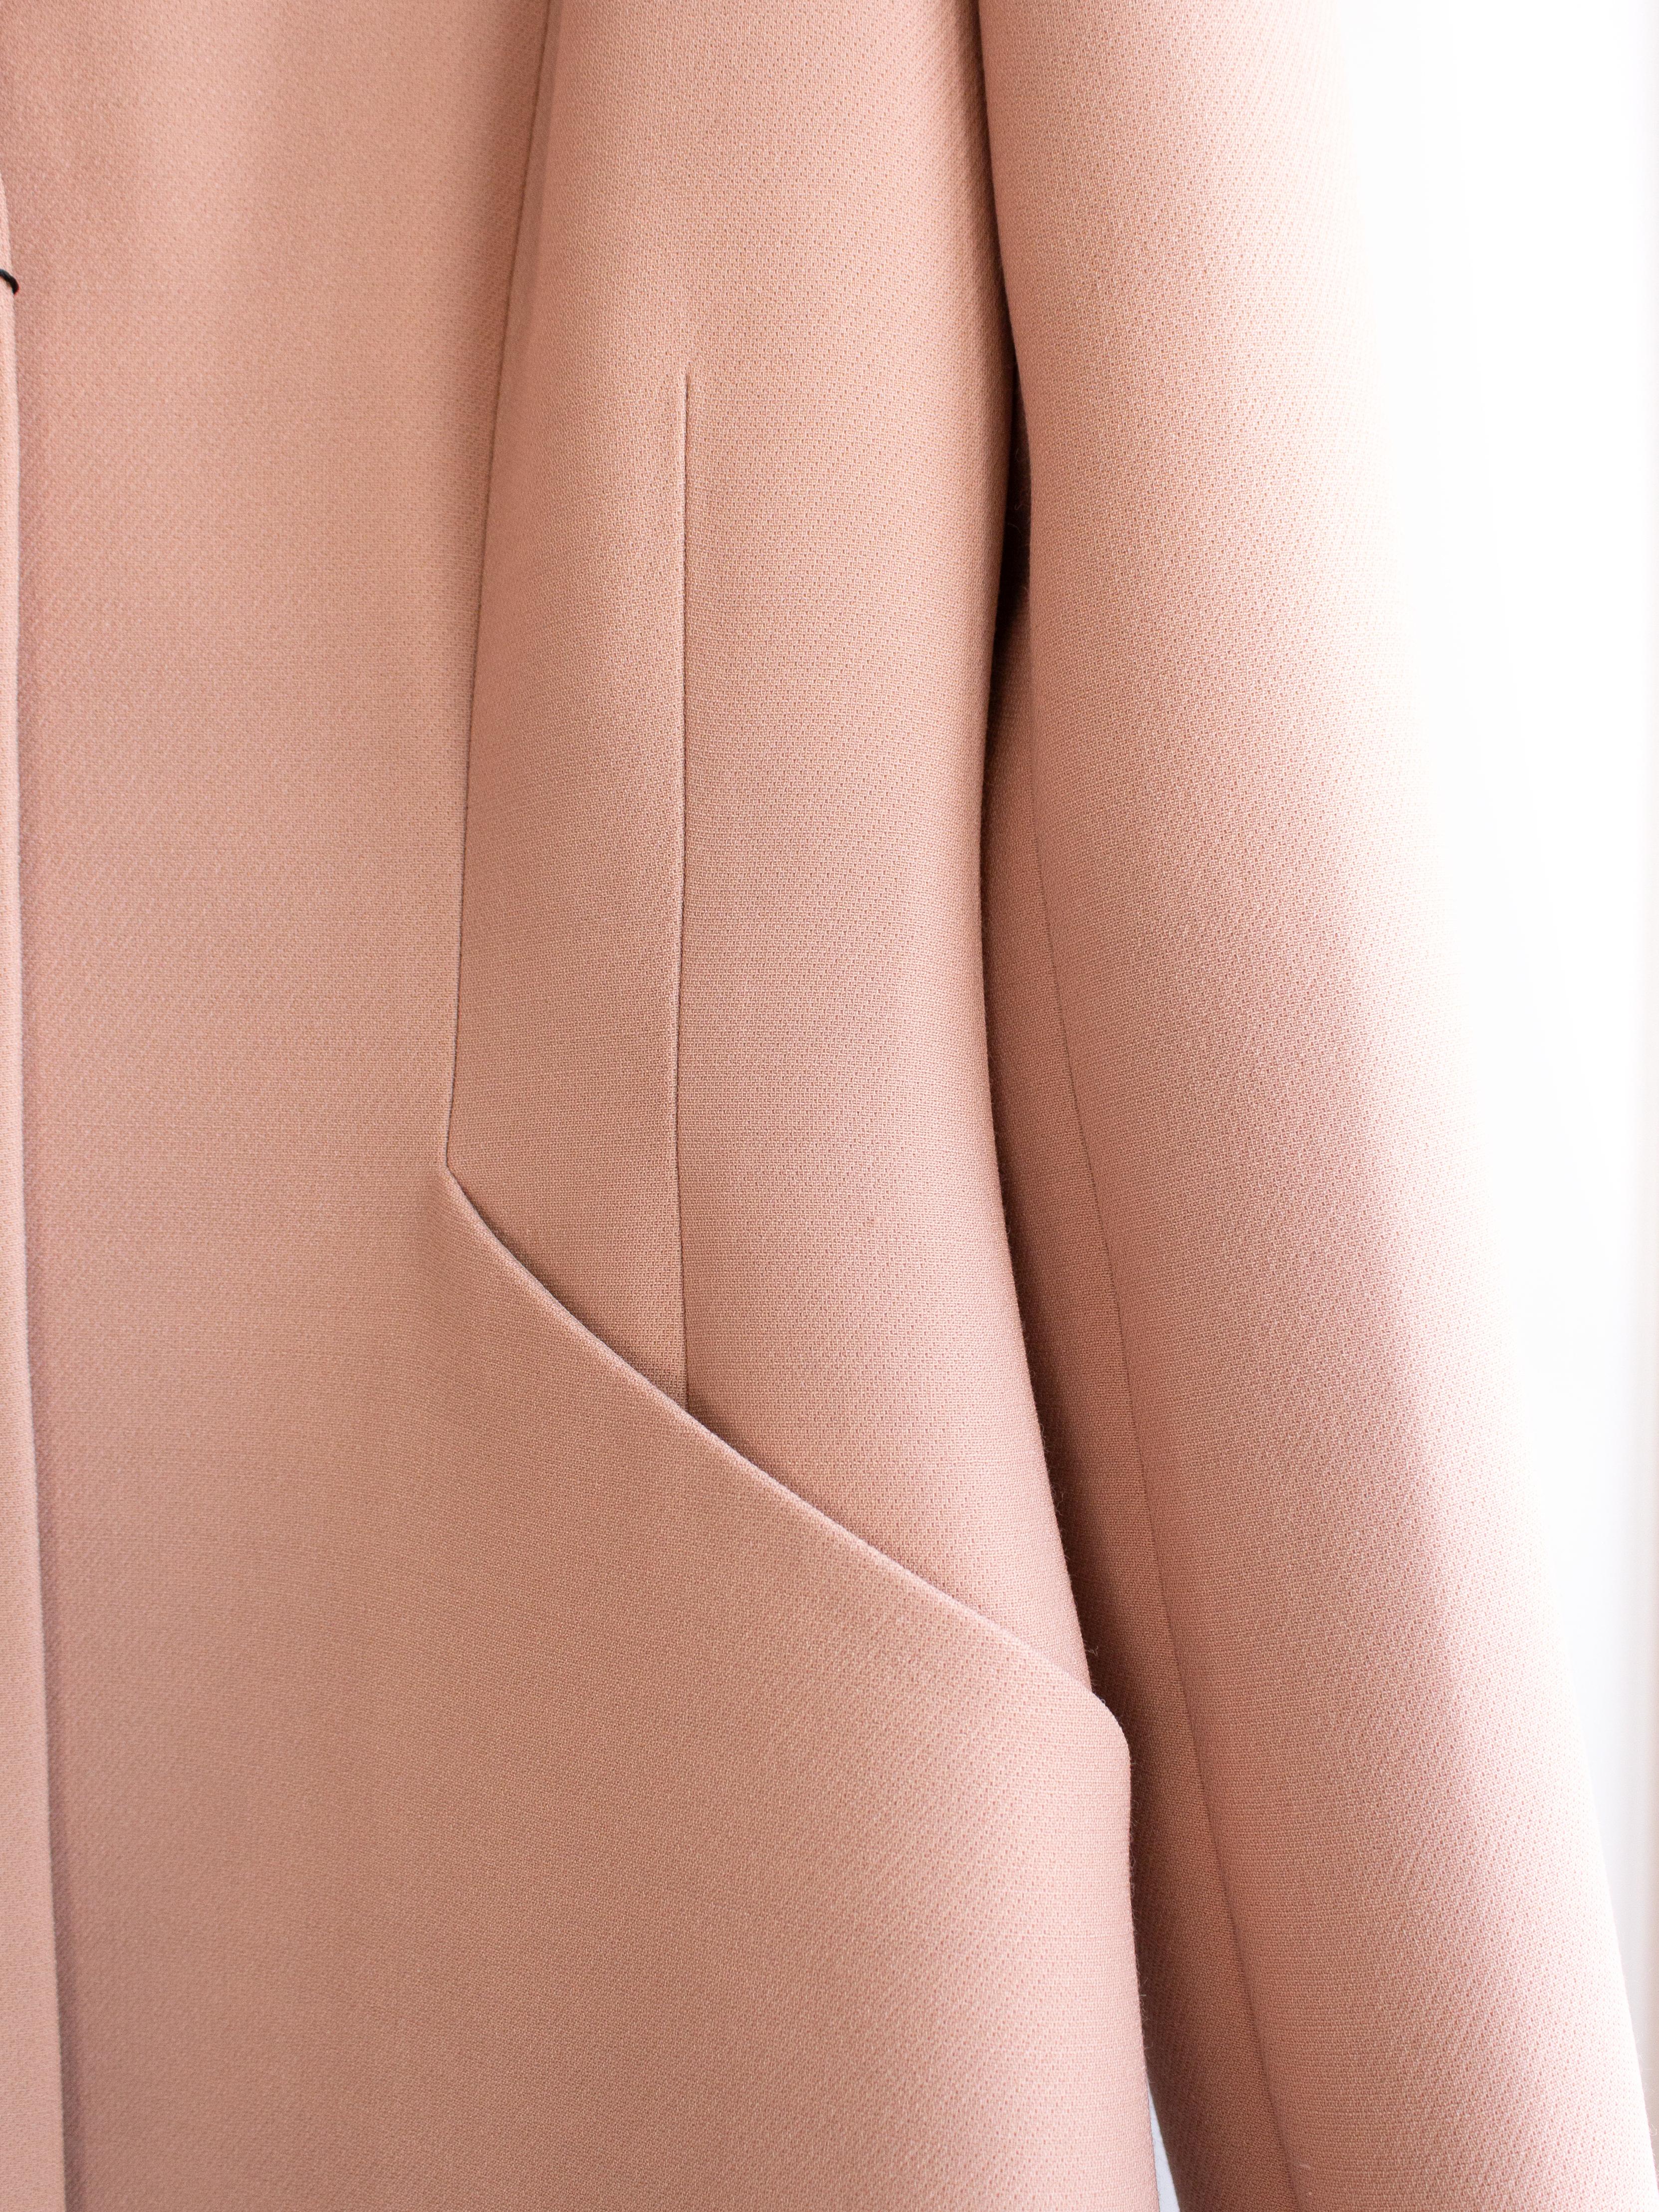 Dior 30 Montaigne Rose Des Vents Blush Pink Nude Bar Jacket For Sale 7